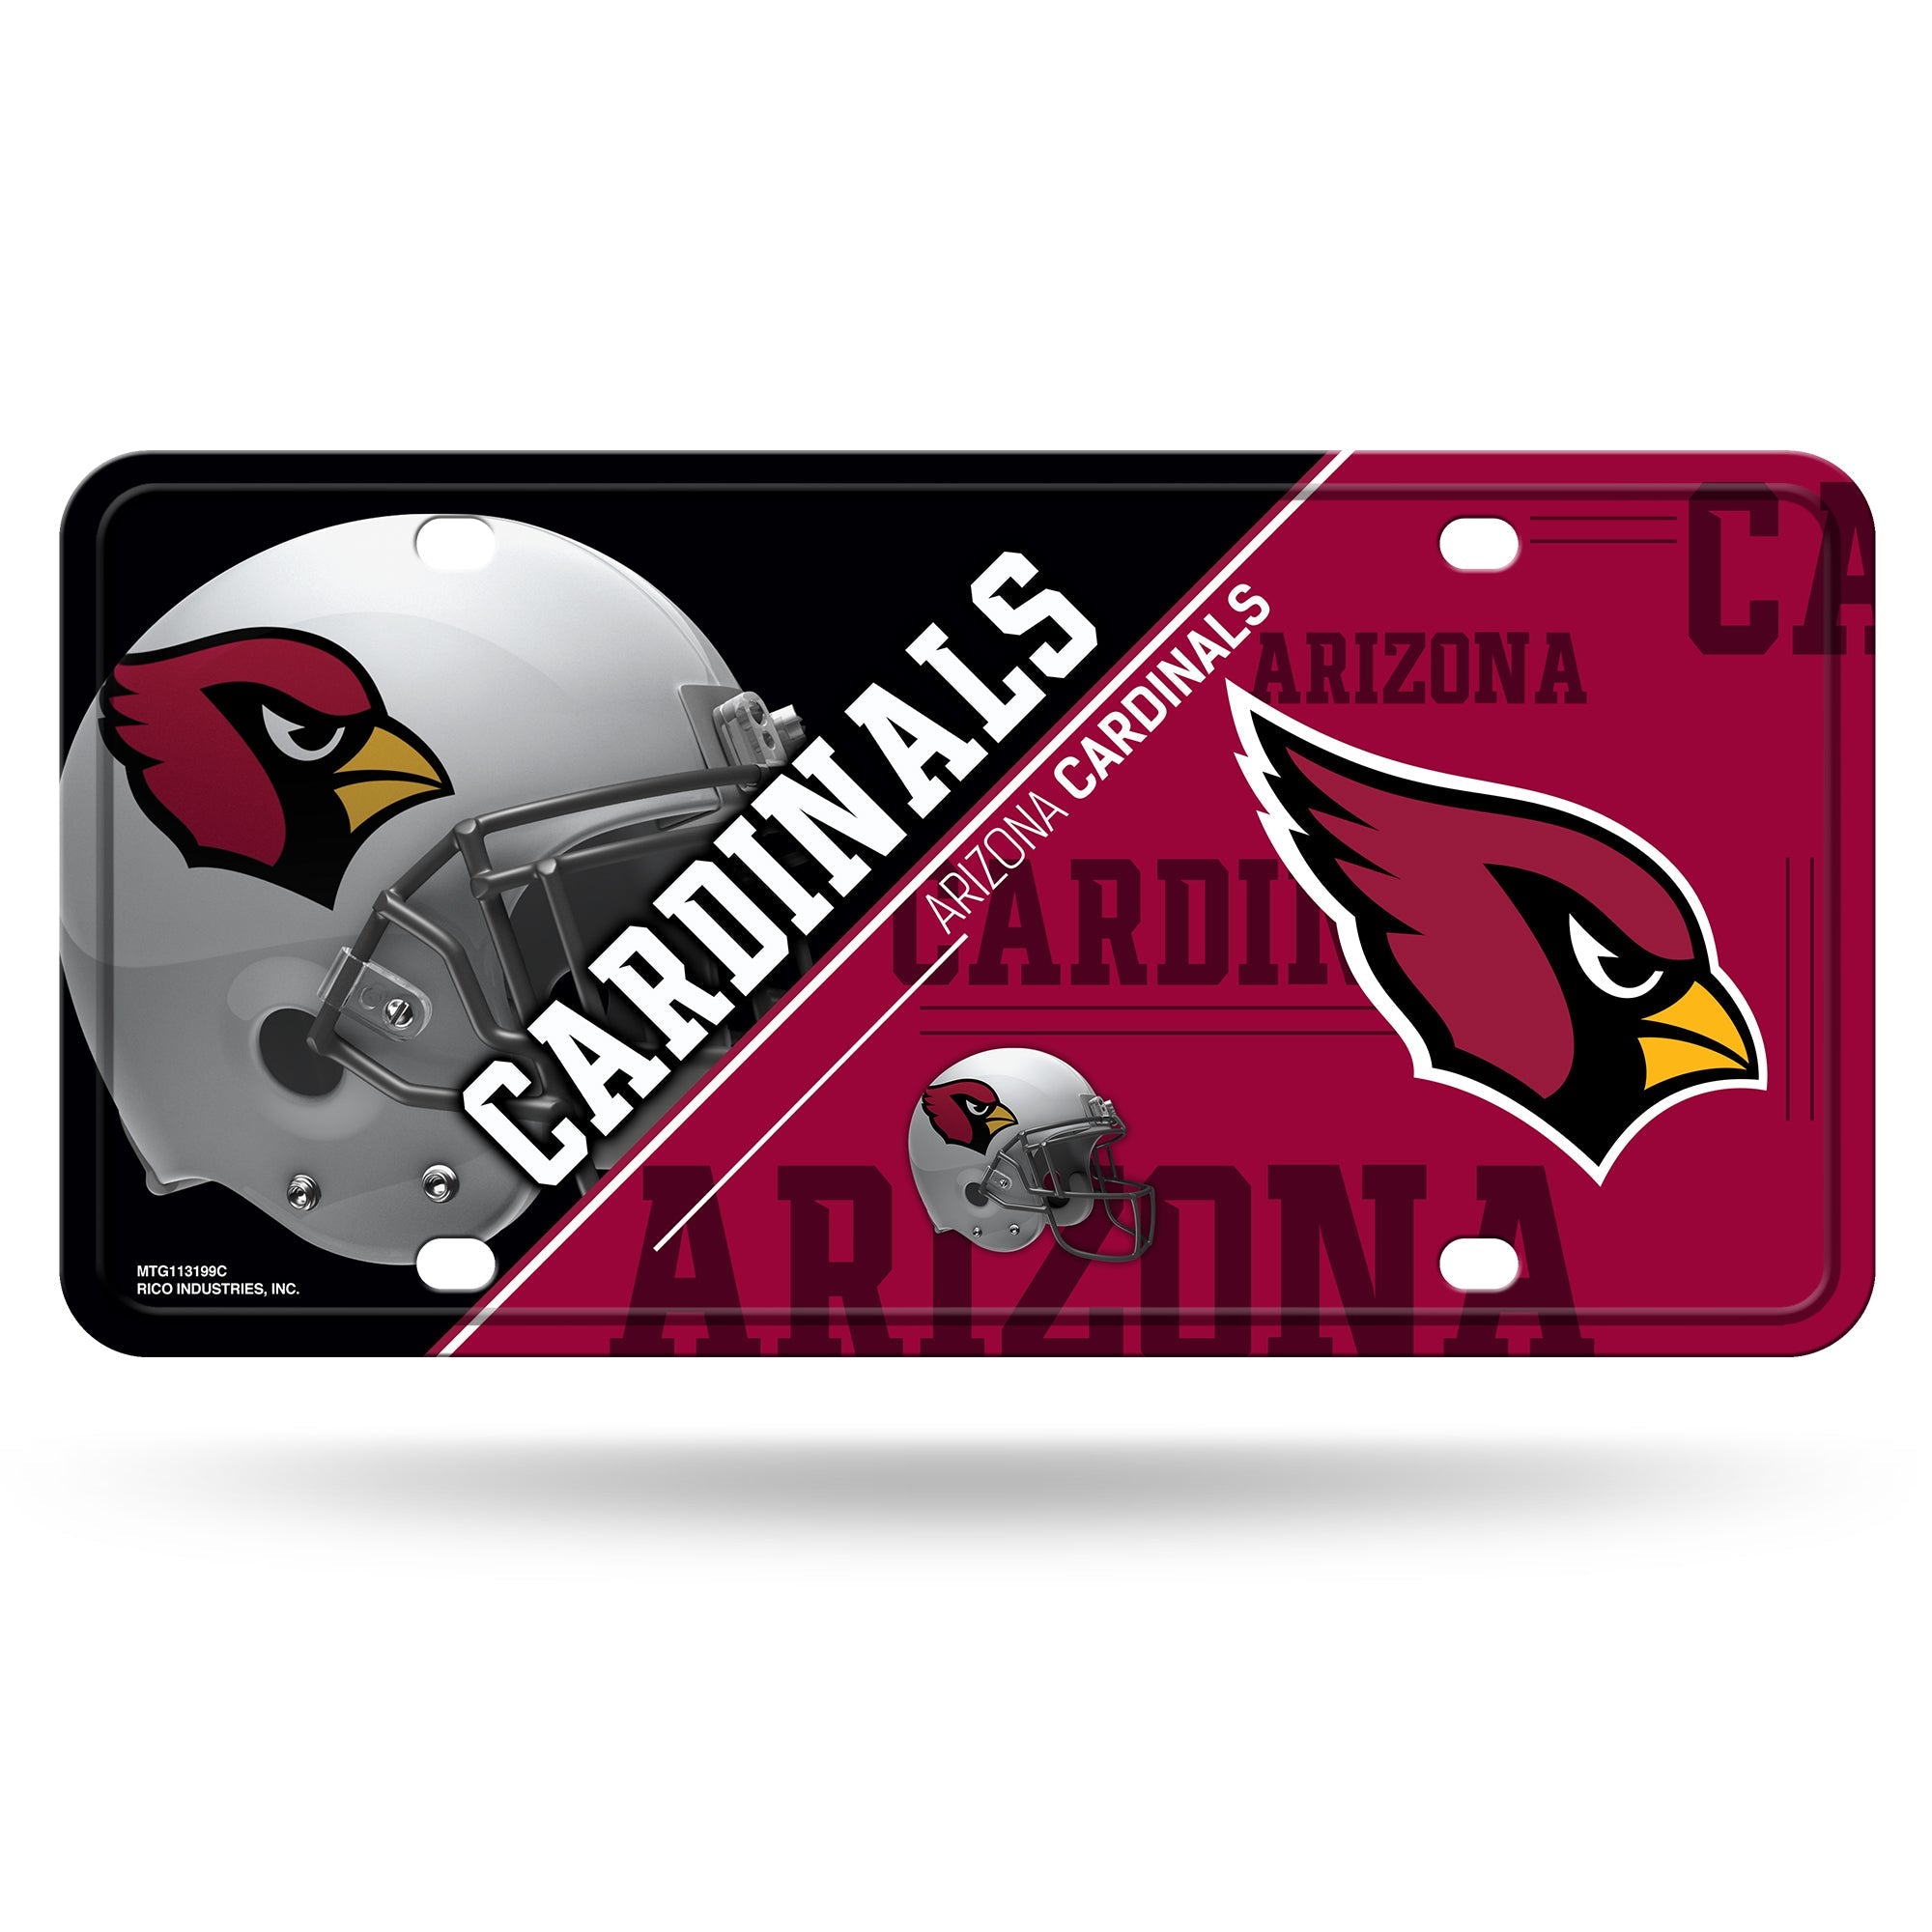 Rico Inc - Arizona cardinals - split design - metal tag